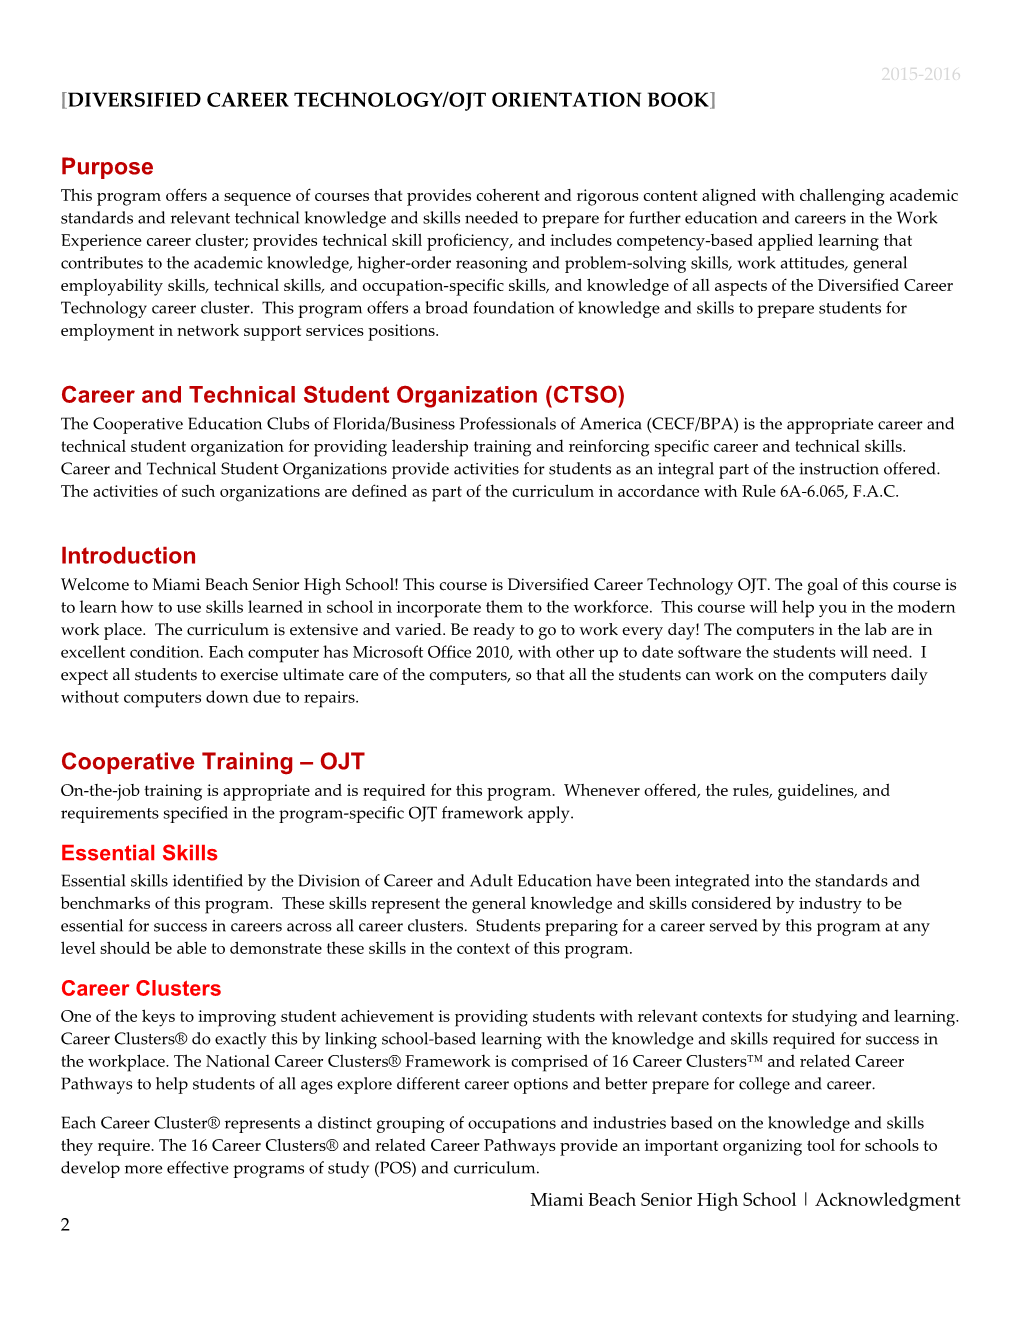 Diversified Career Technology/OJT Orientation Book